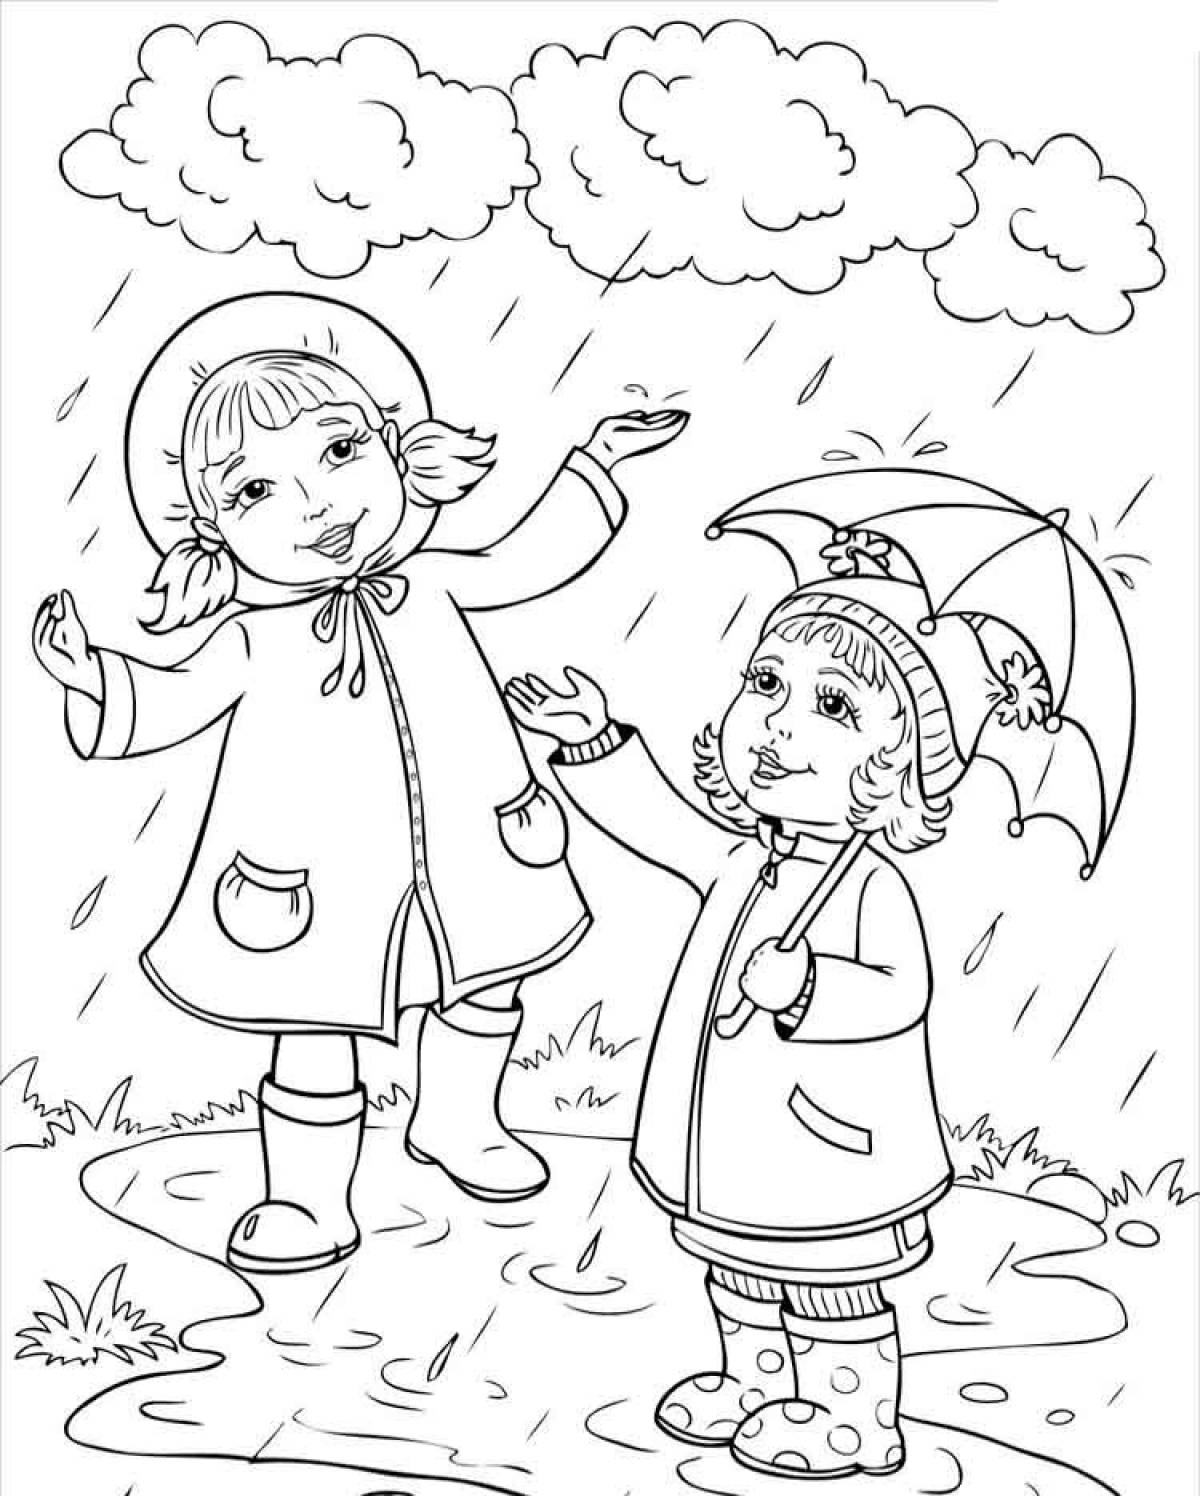 Rain coloring page